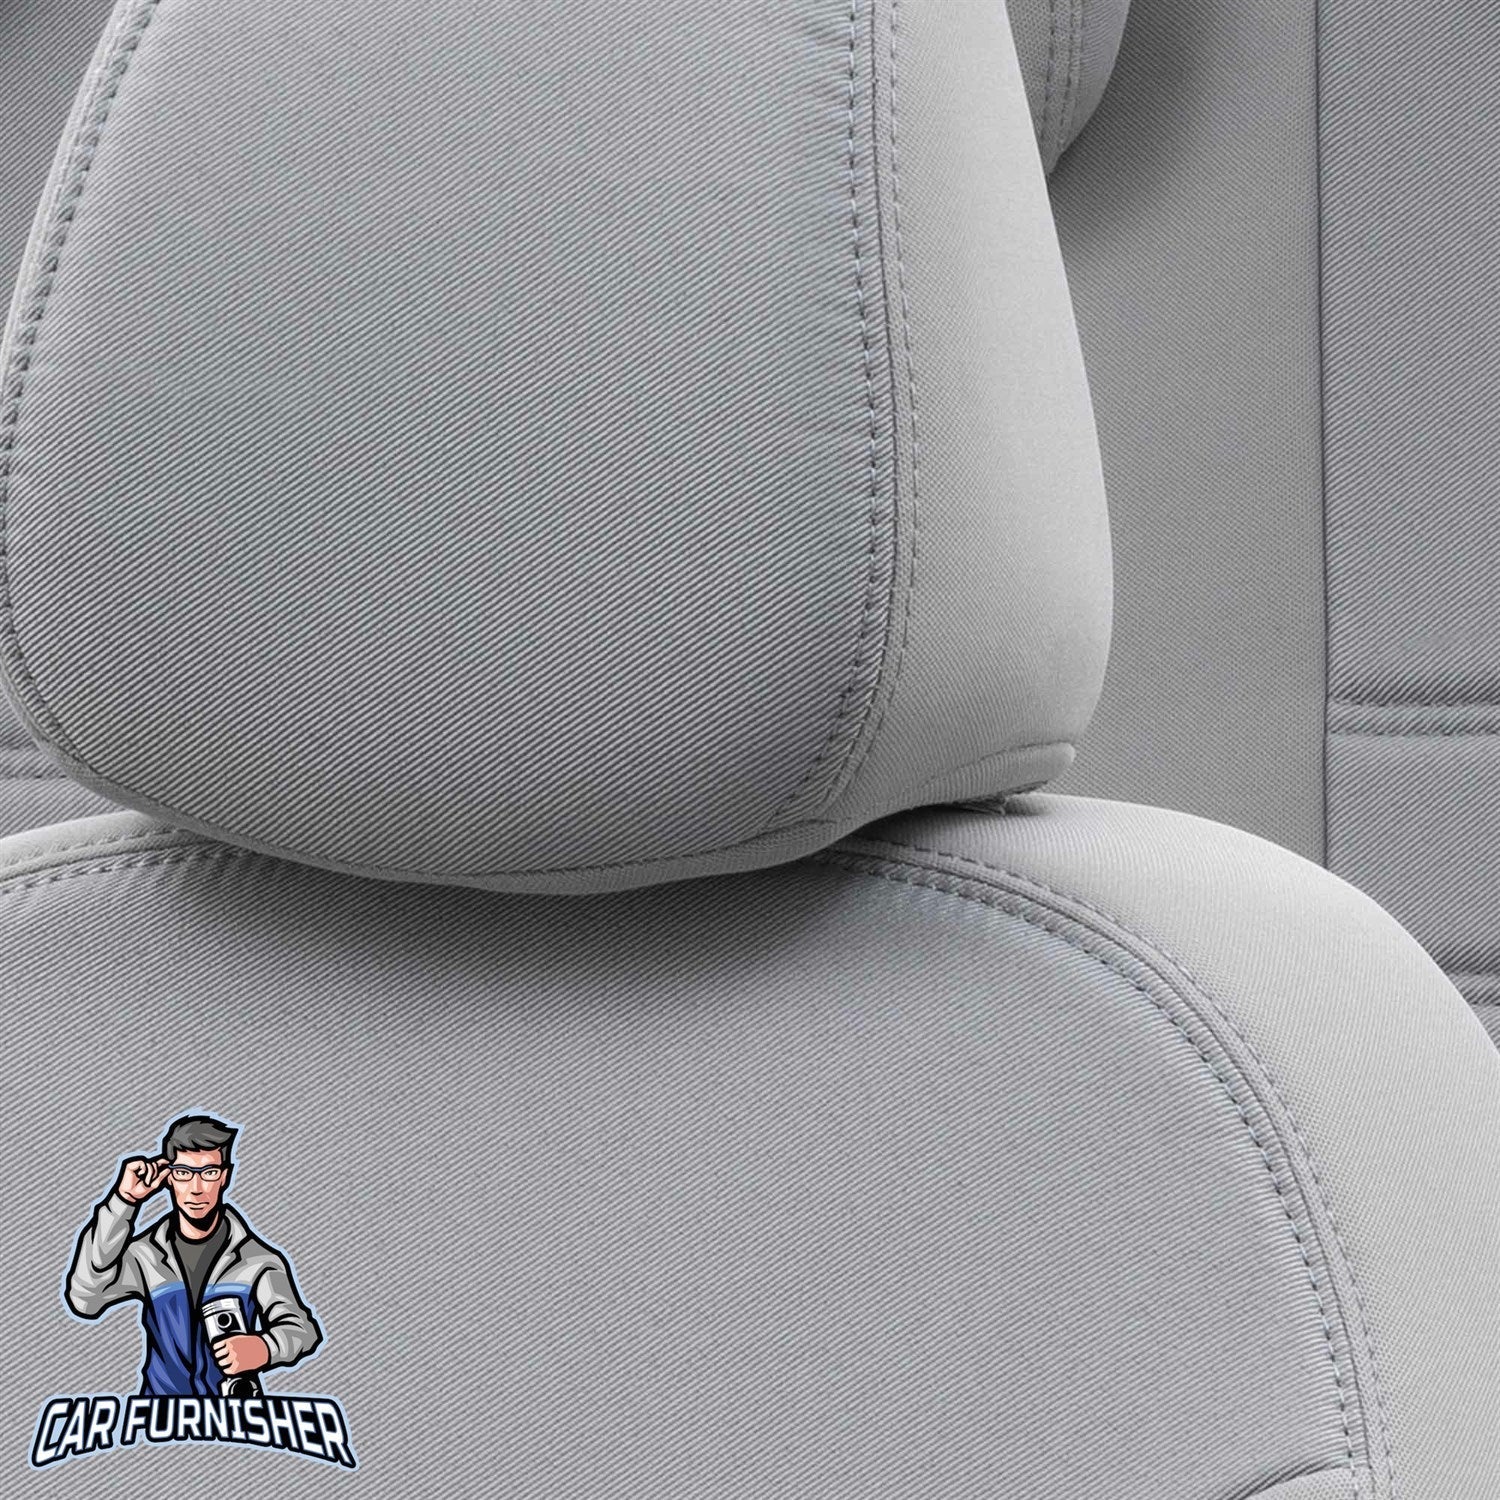 Isuzu L35 Seat Cover Original Jacquard Design Light Gray Jacquard Fabric